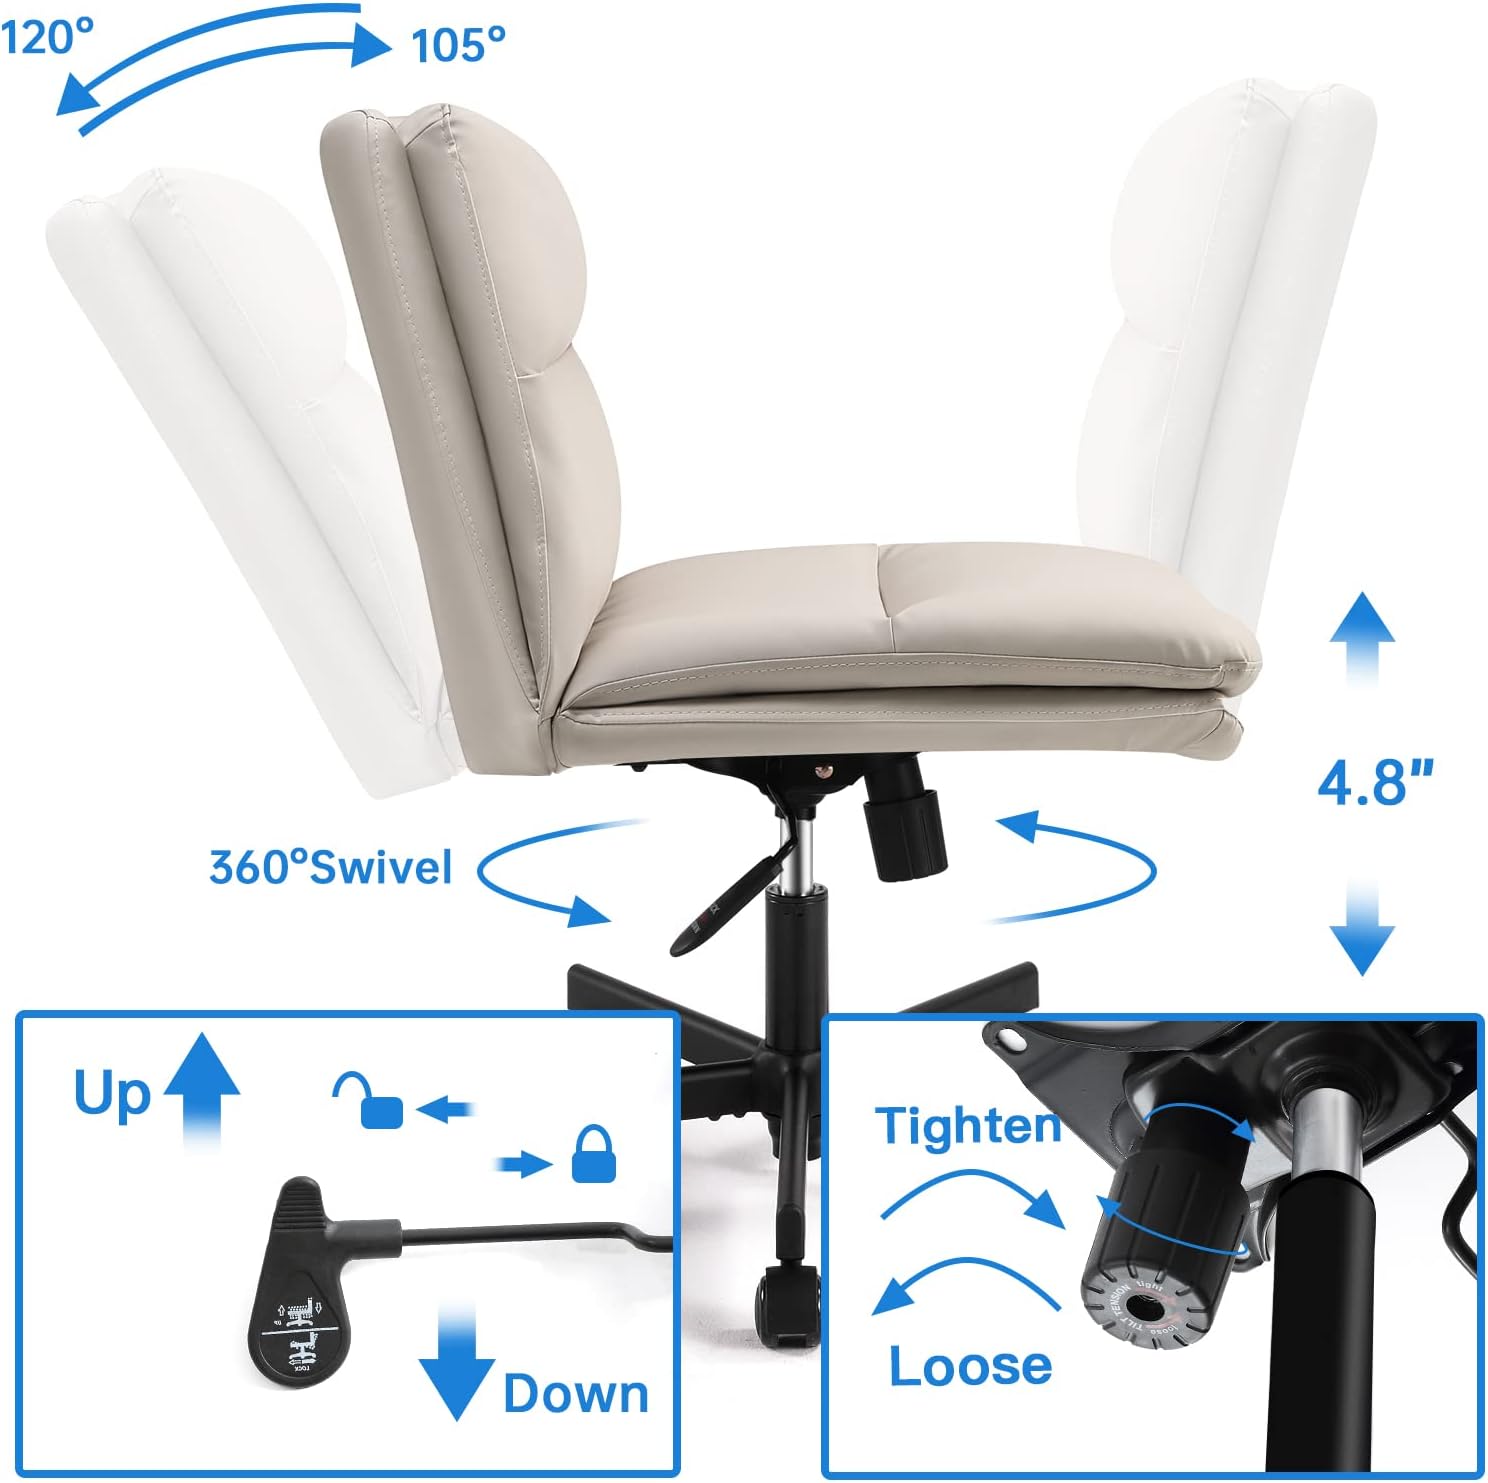 Silla de escritorio de oficina sin brazos con ruedas, silla de tocador -  VIRTUAL MUEBLES